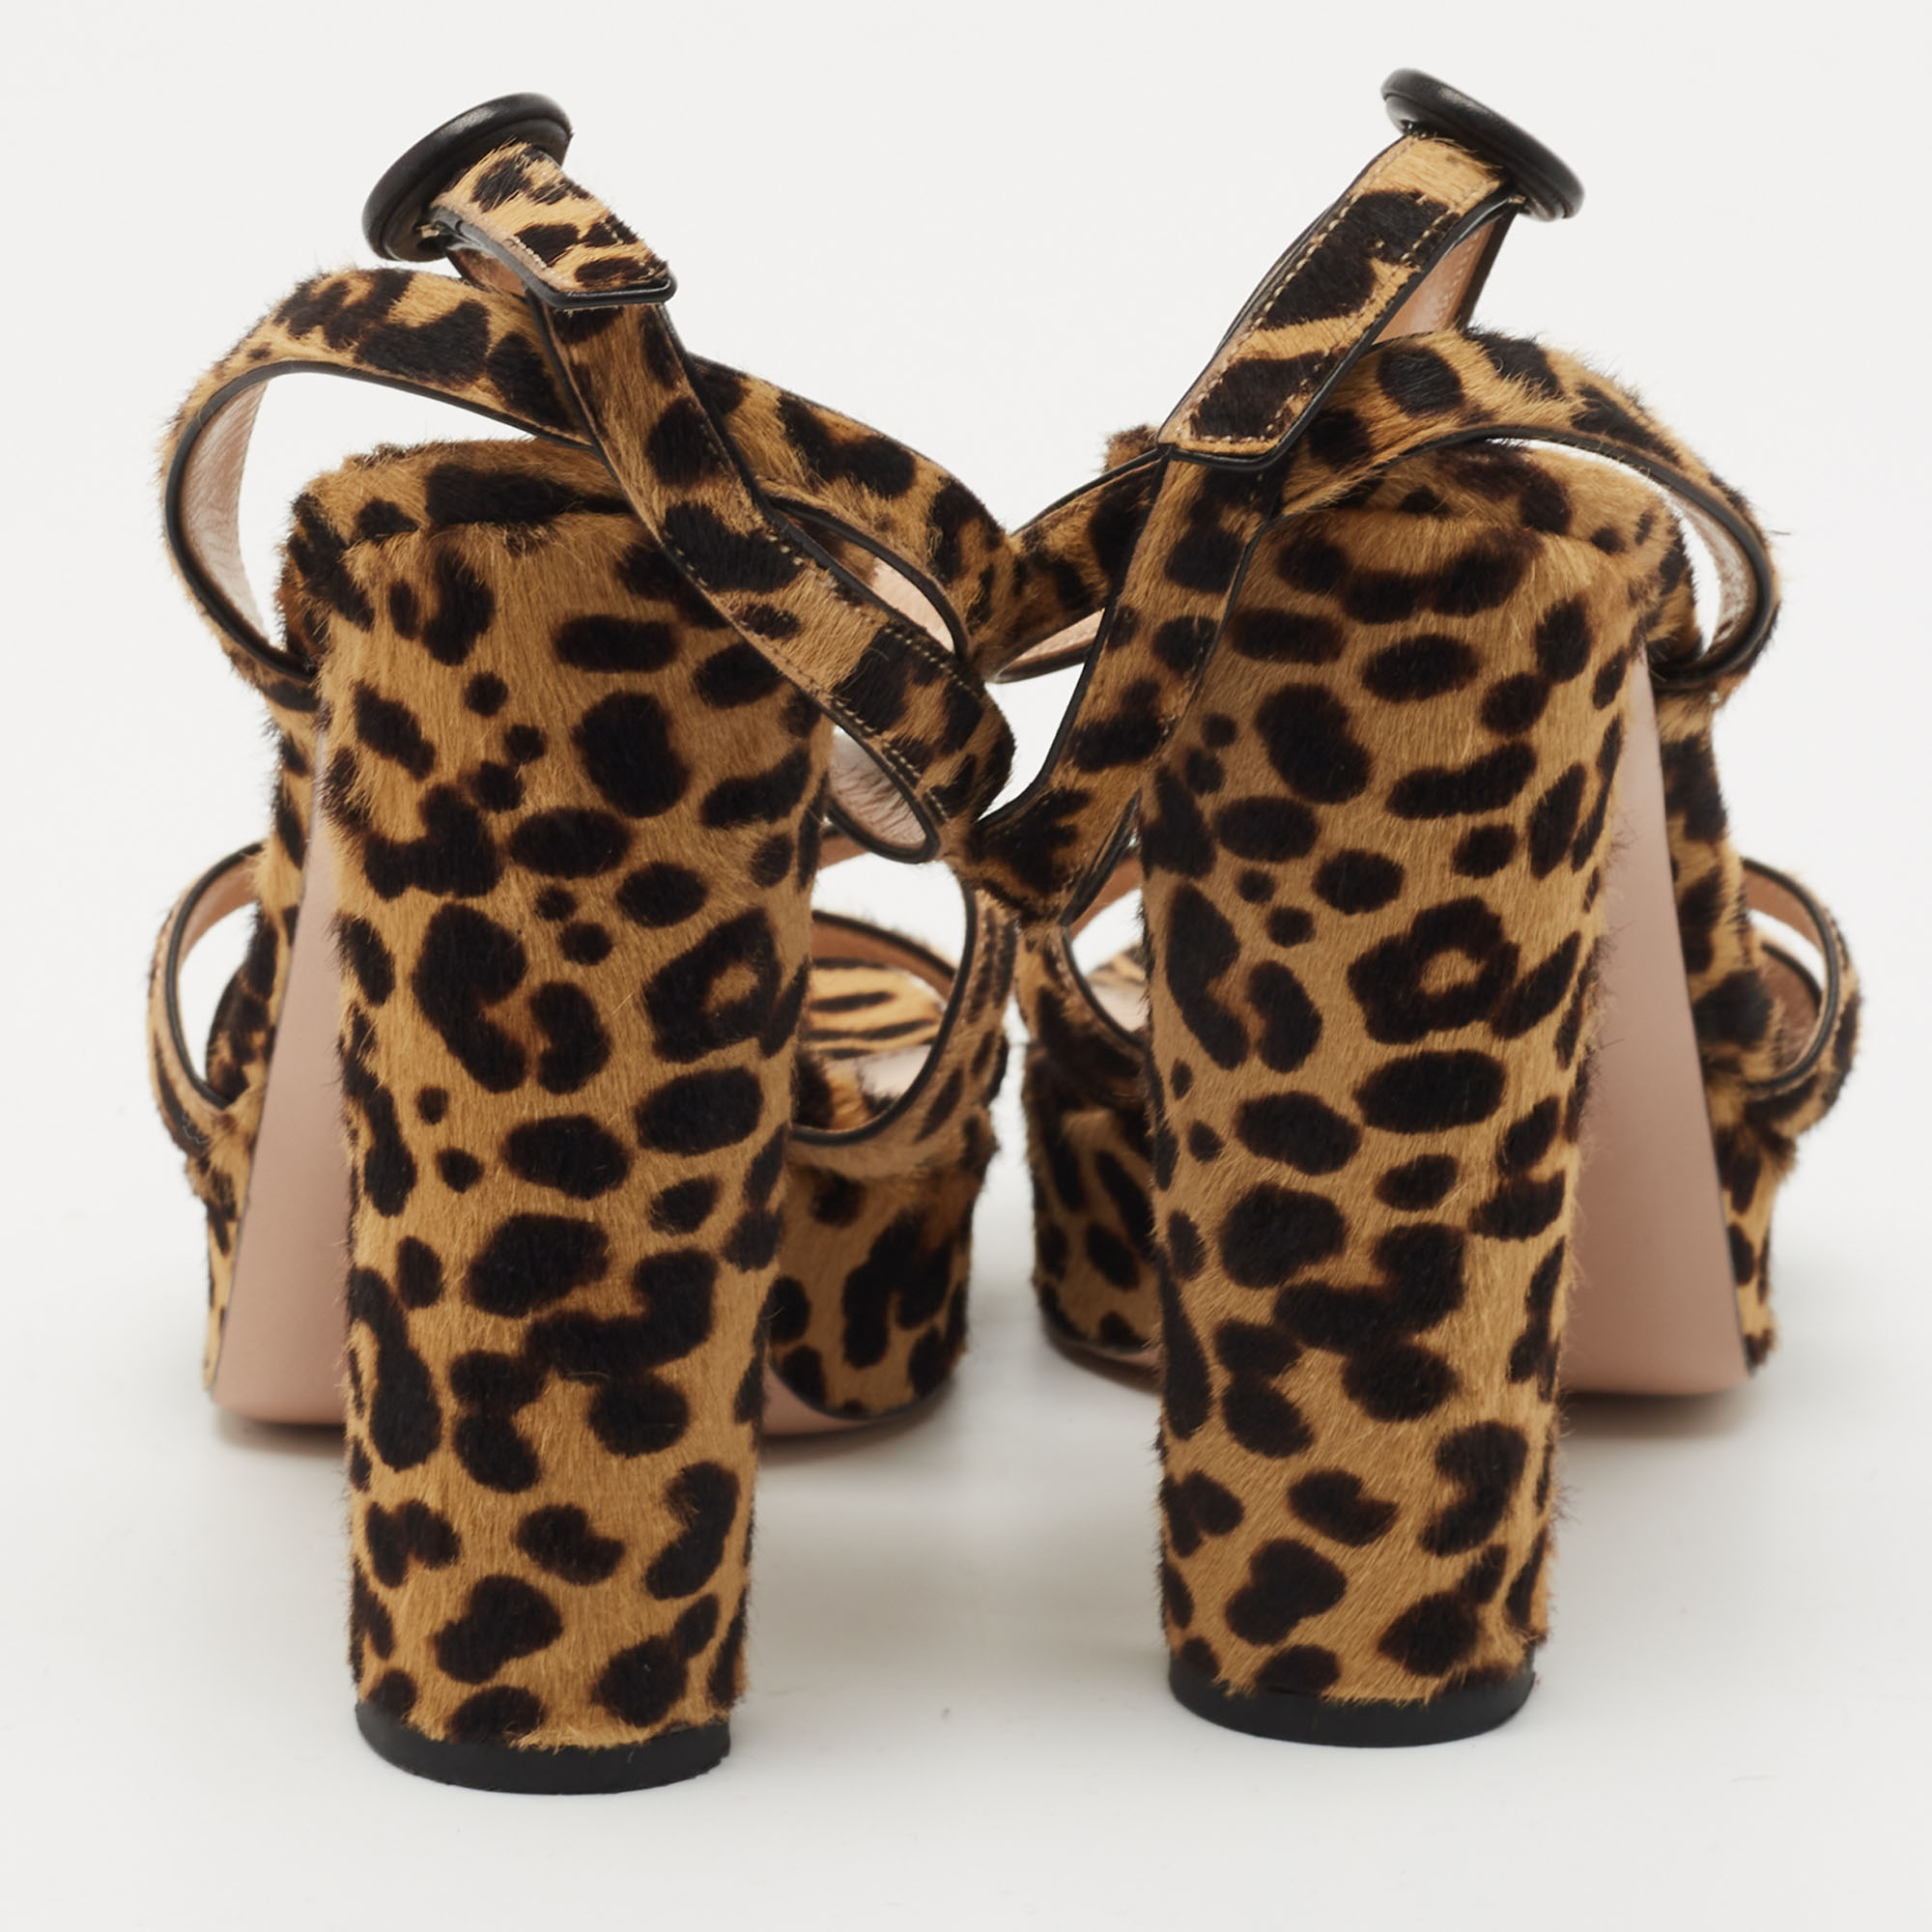 Gianvito Rossi Brown/Beige Leopard Print Calf Hair Platform Ankle Strap Sandals Size 39